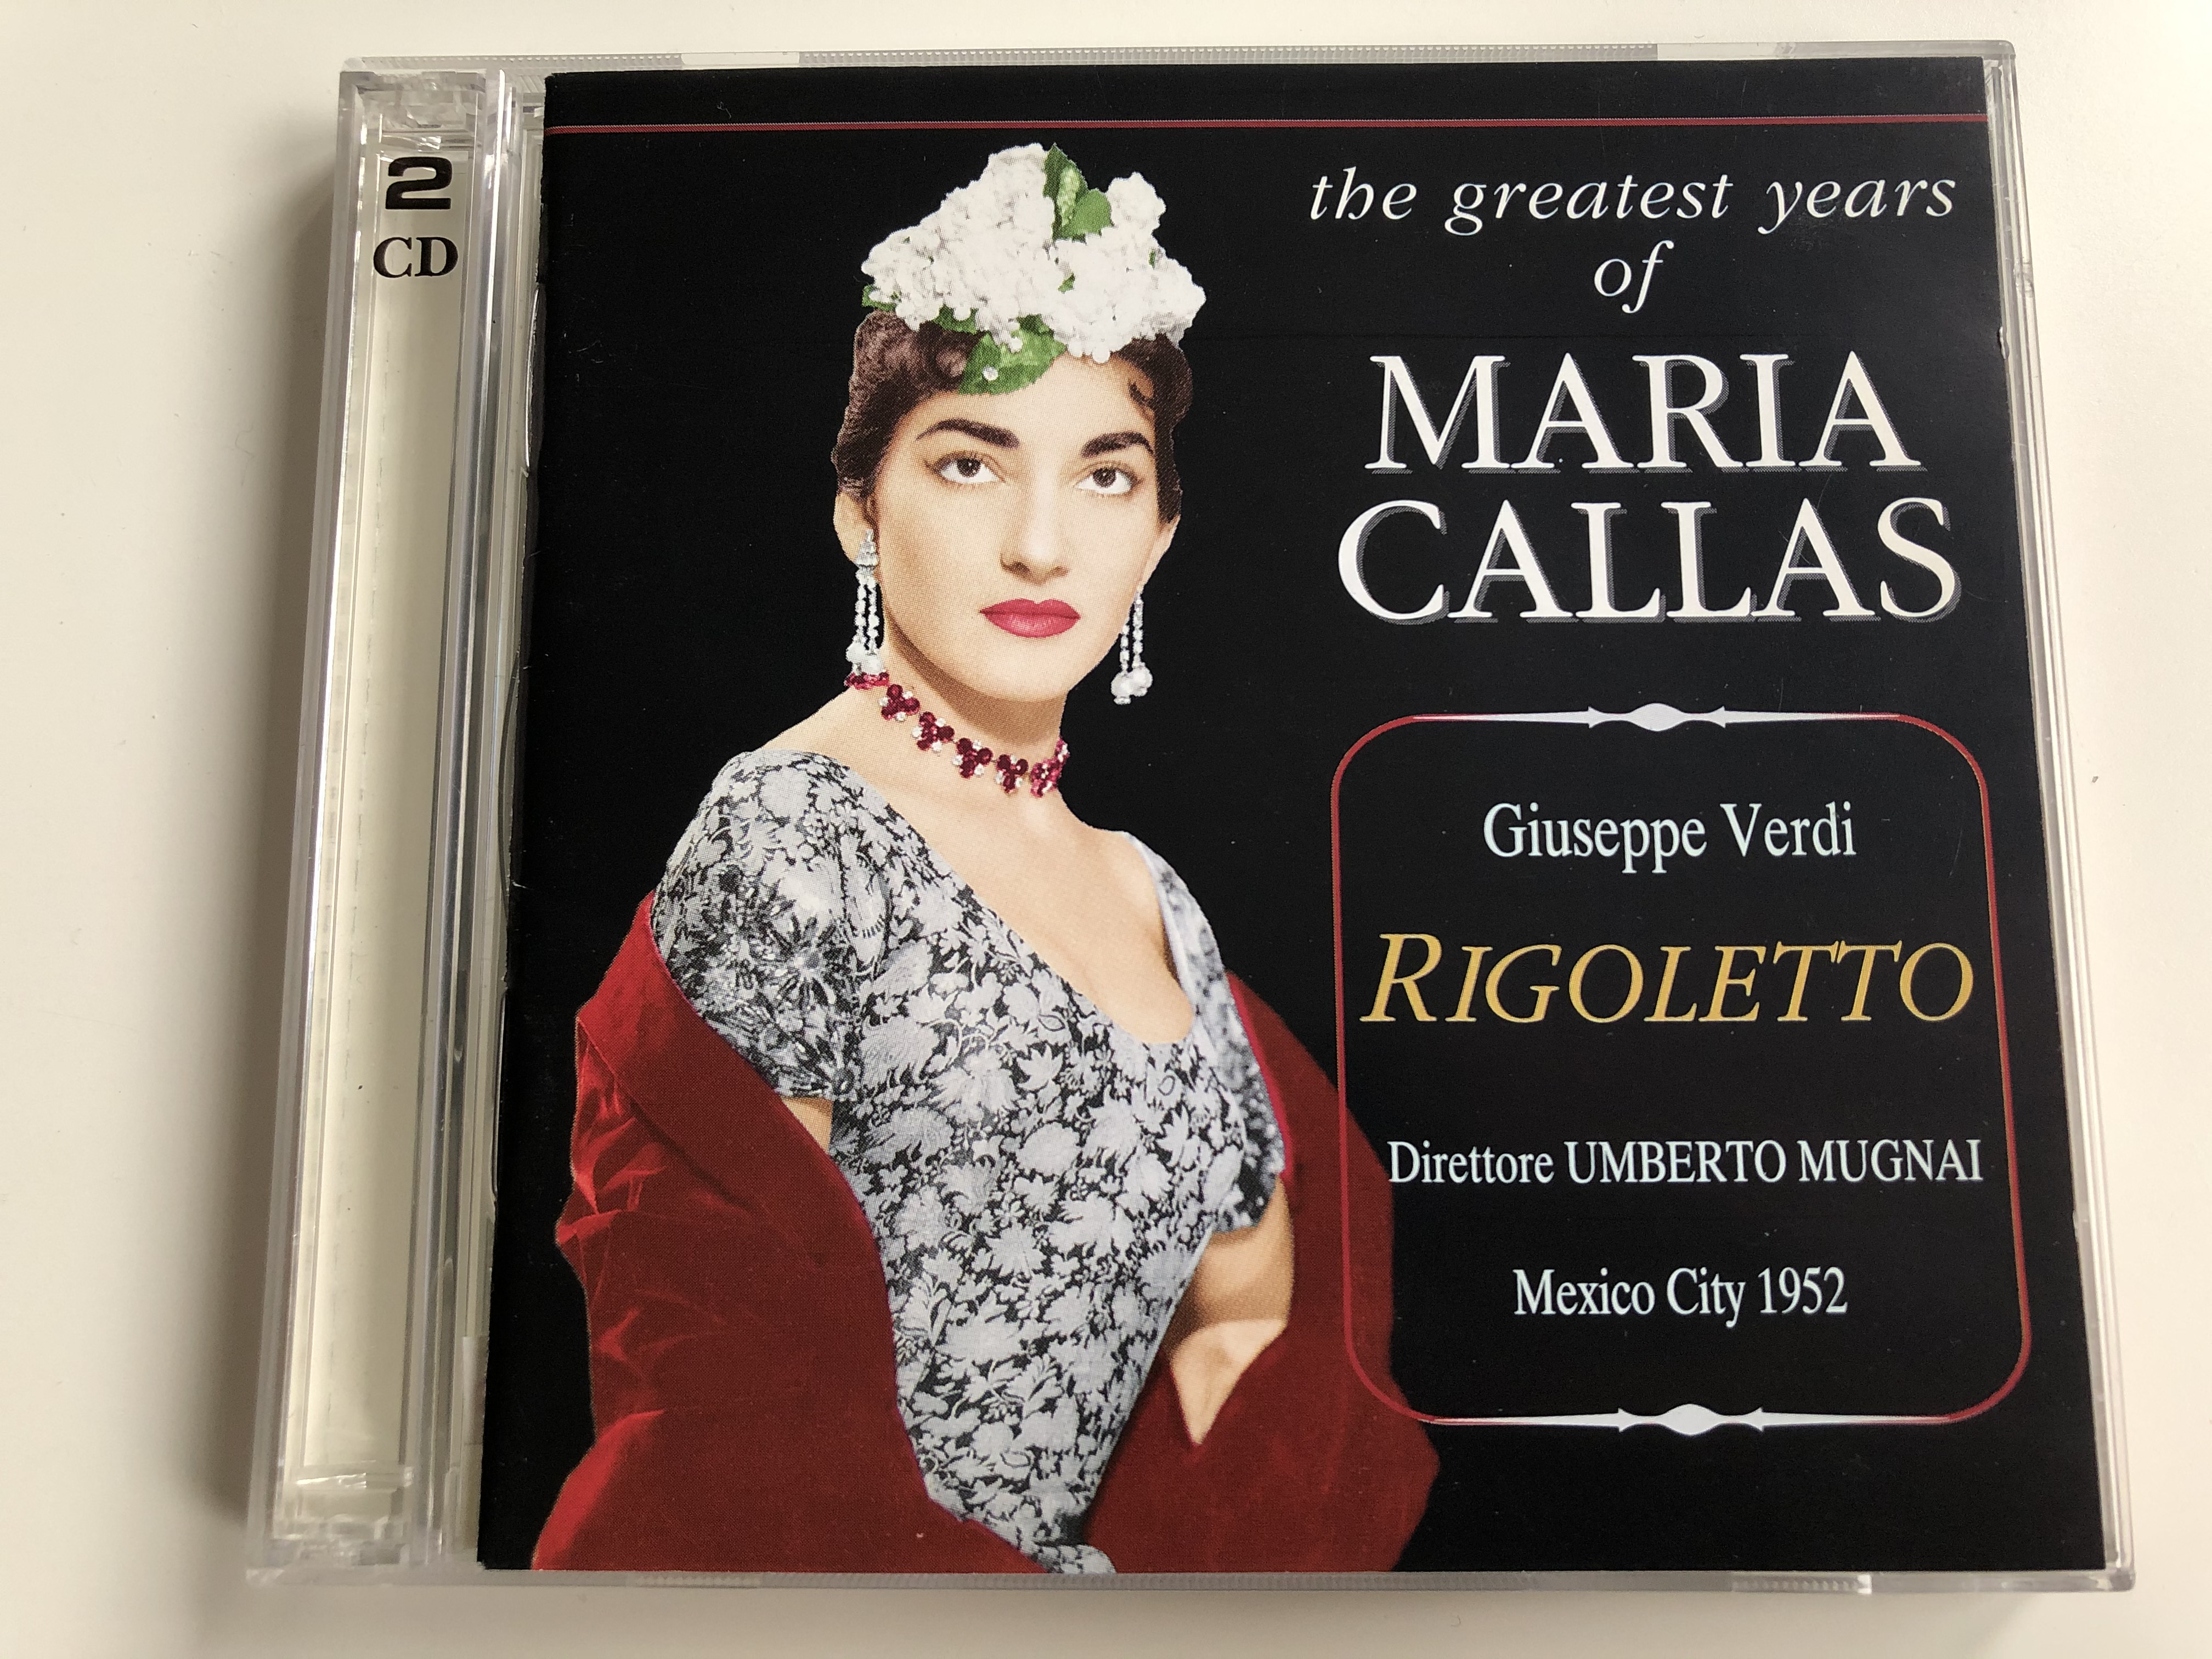 the-greatest-years-of-maria-callas-giuseppe-verdi-rigoletto-direttore-umberto-mugnai-mexico-city-1952-sakkaris-records-2x-audio-cd-1997-pr.sr.-263264-1-.jpg